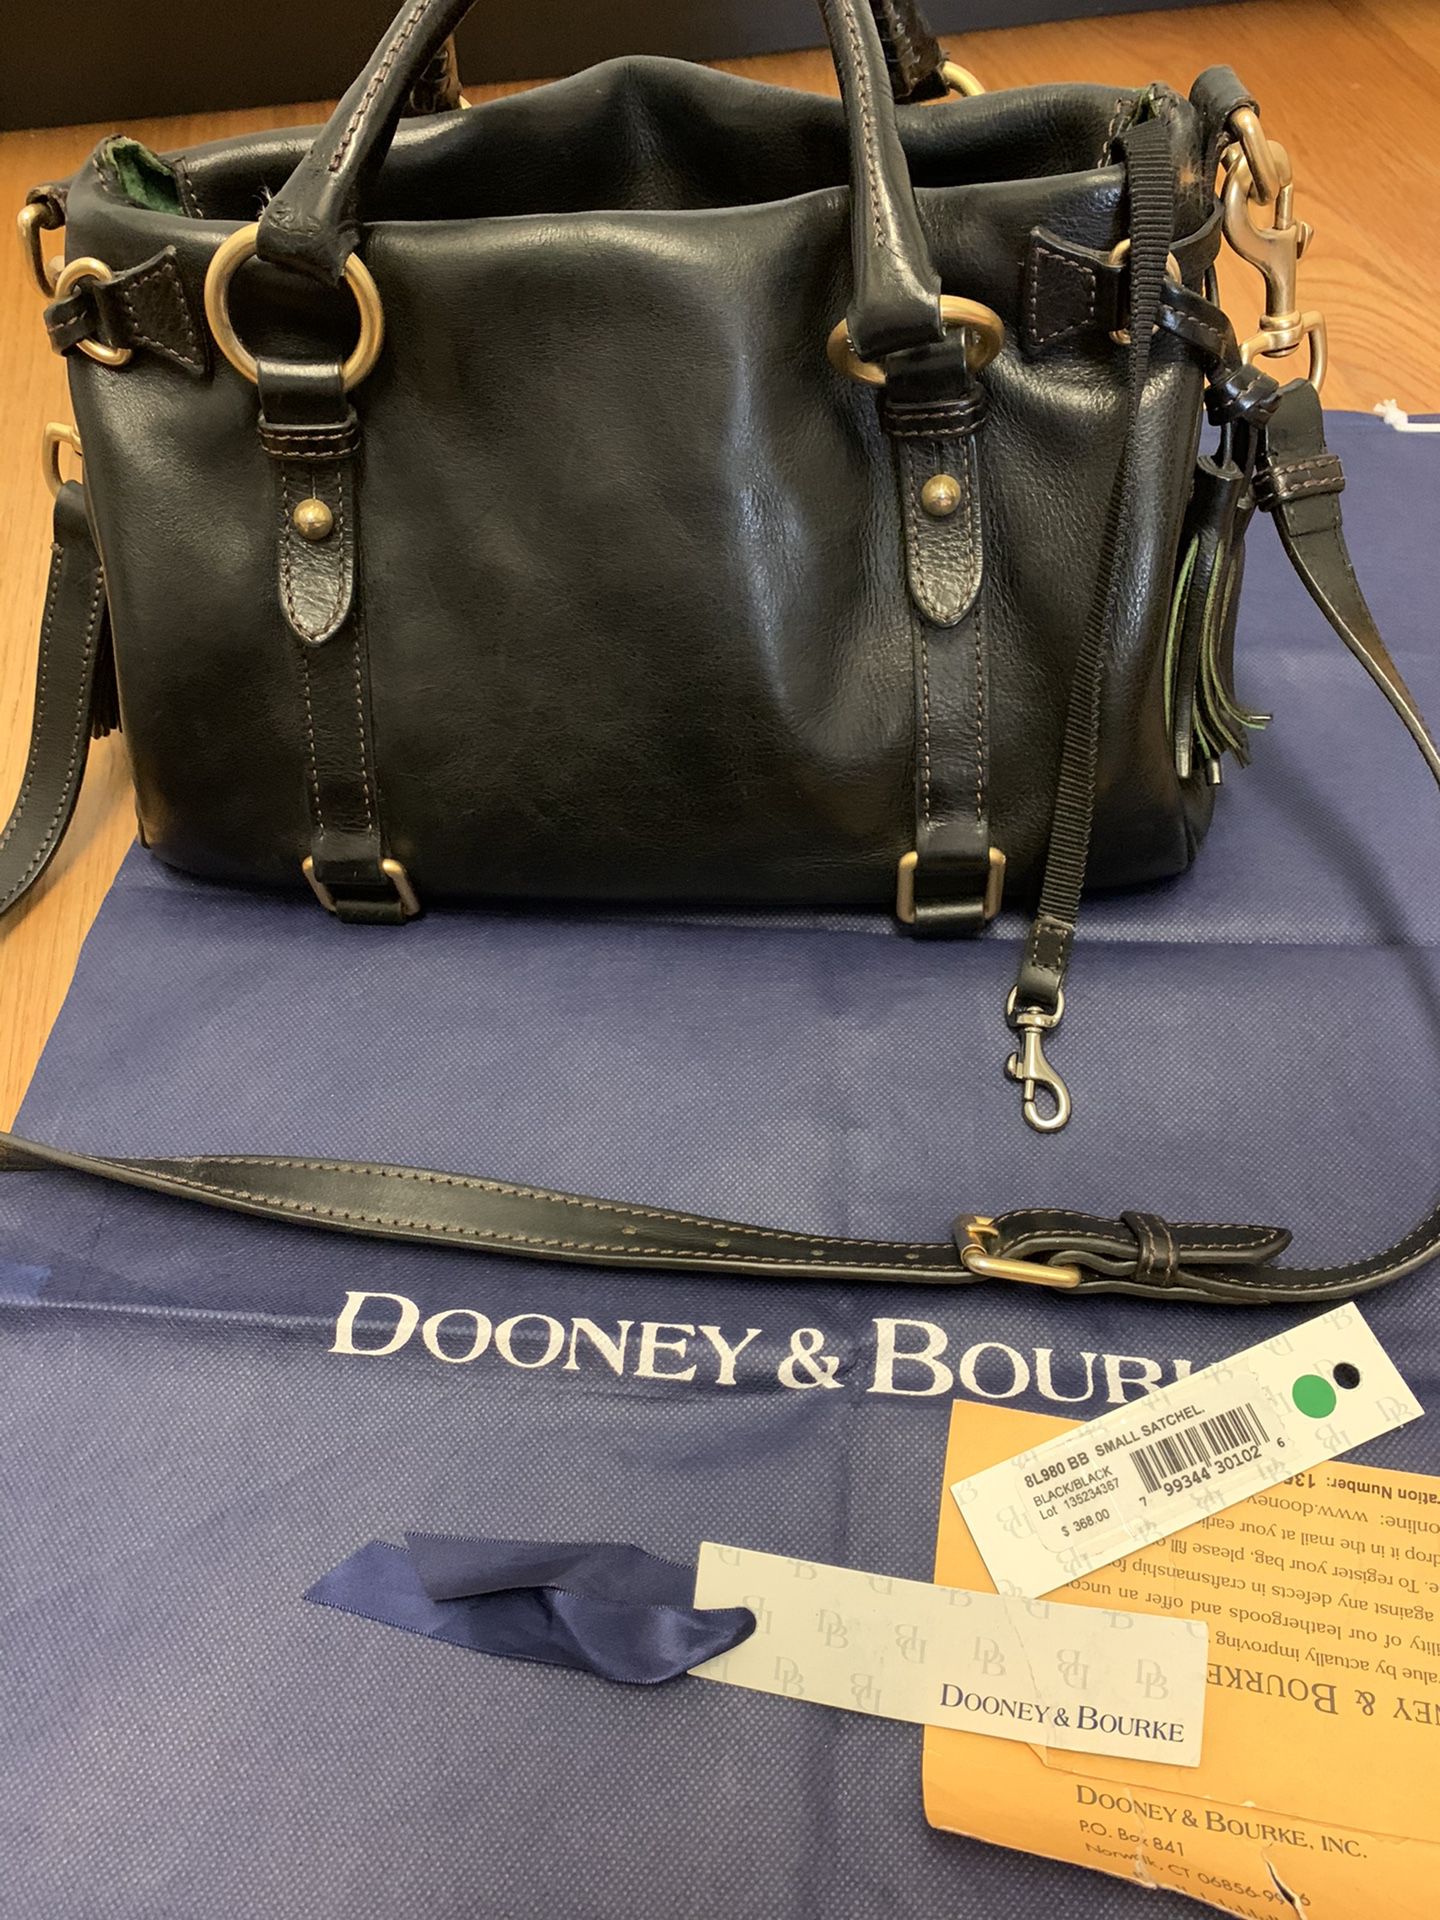 Dooney & Burke small black leather satchel